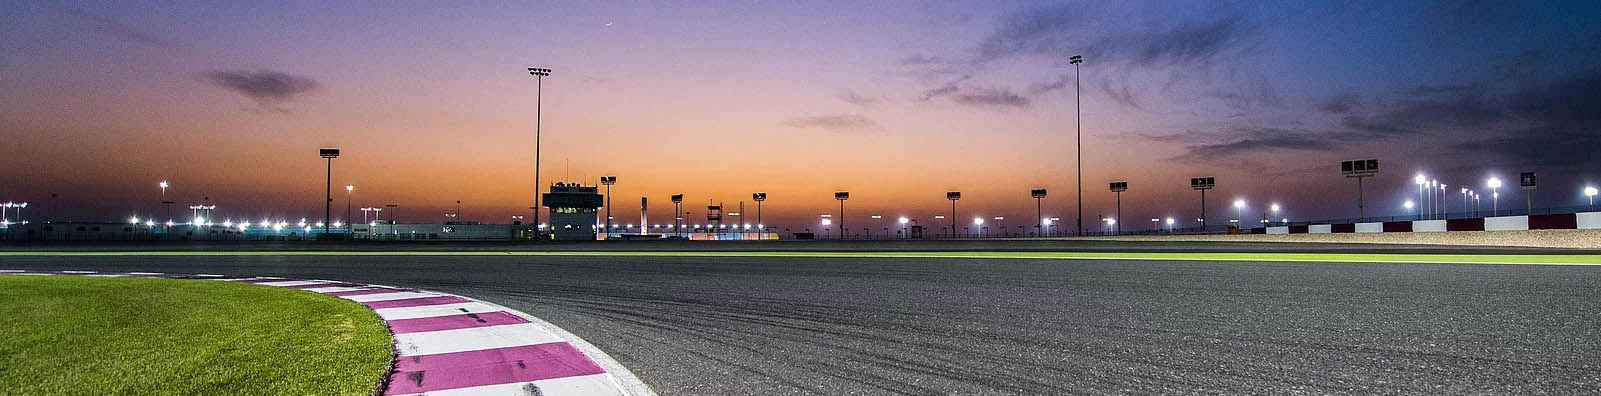 Viñales fastest at the #QatarTest